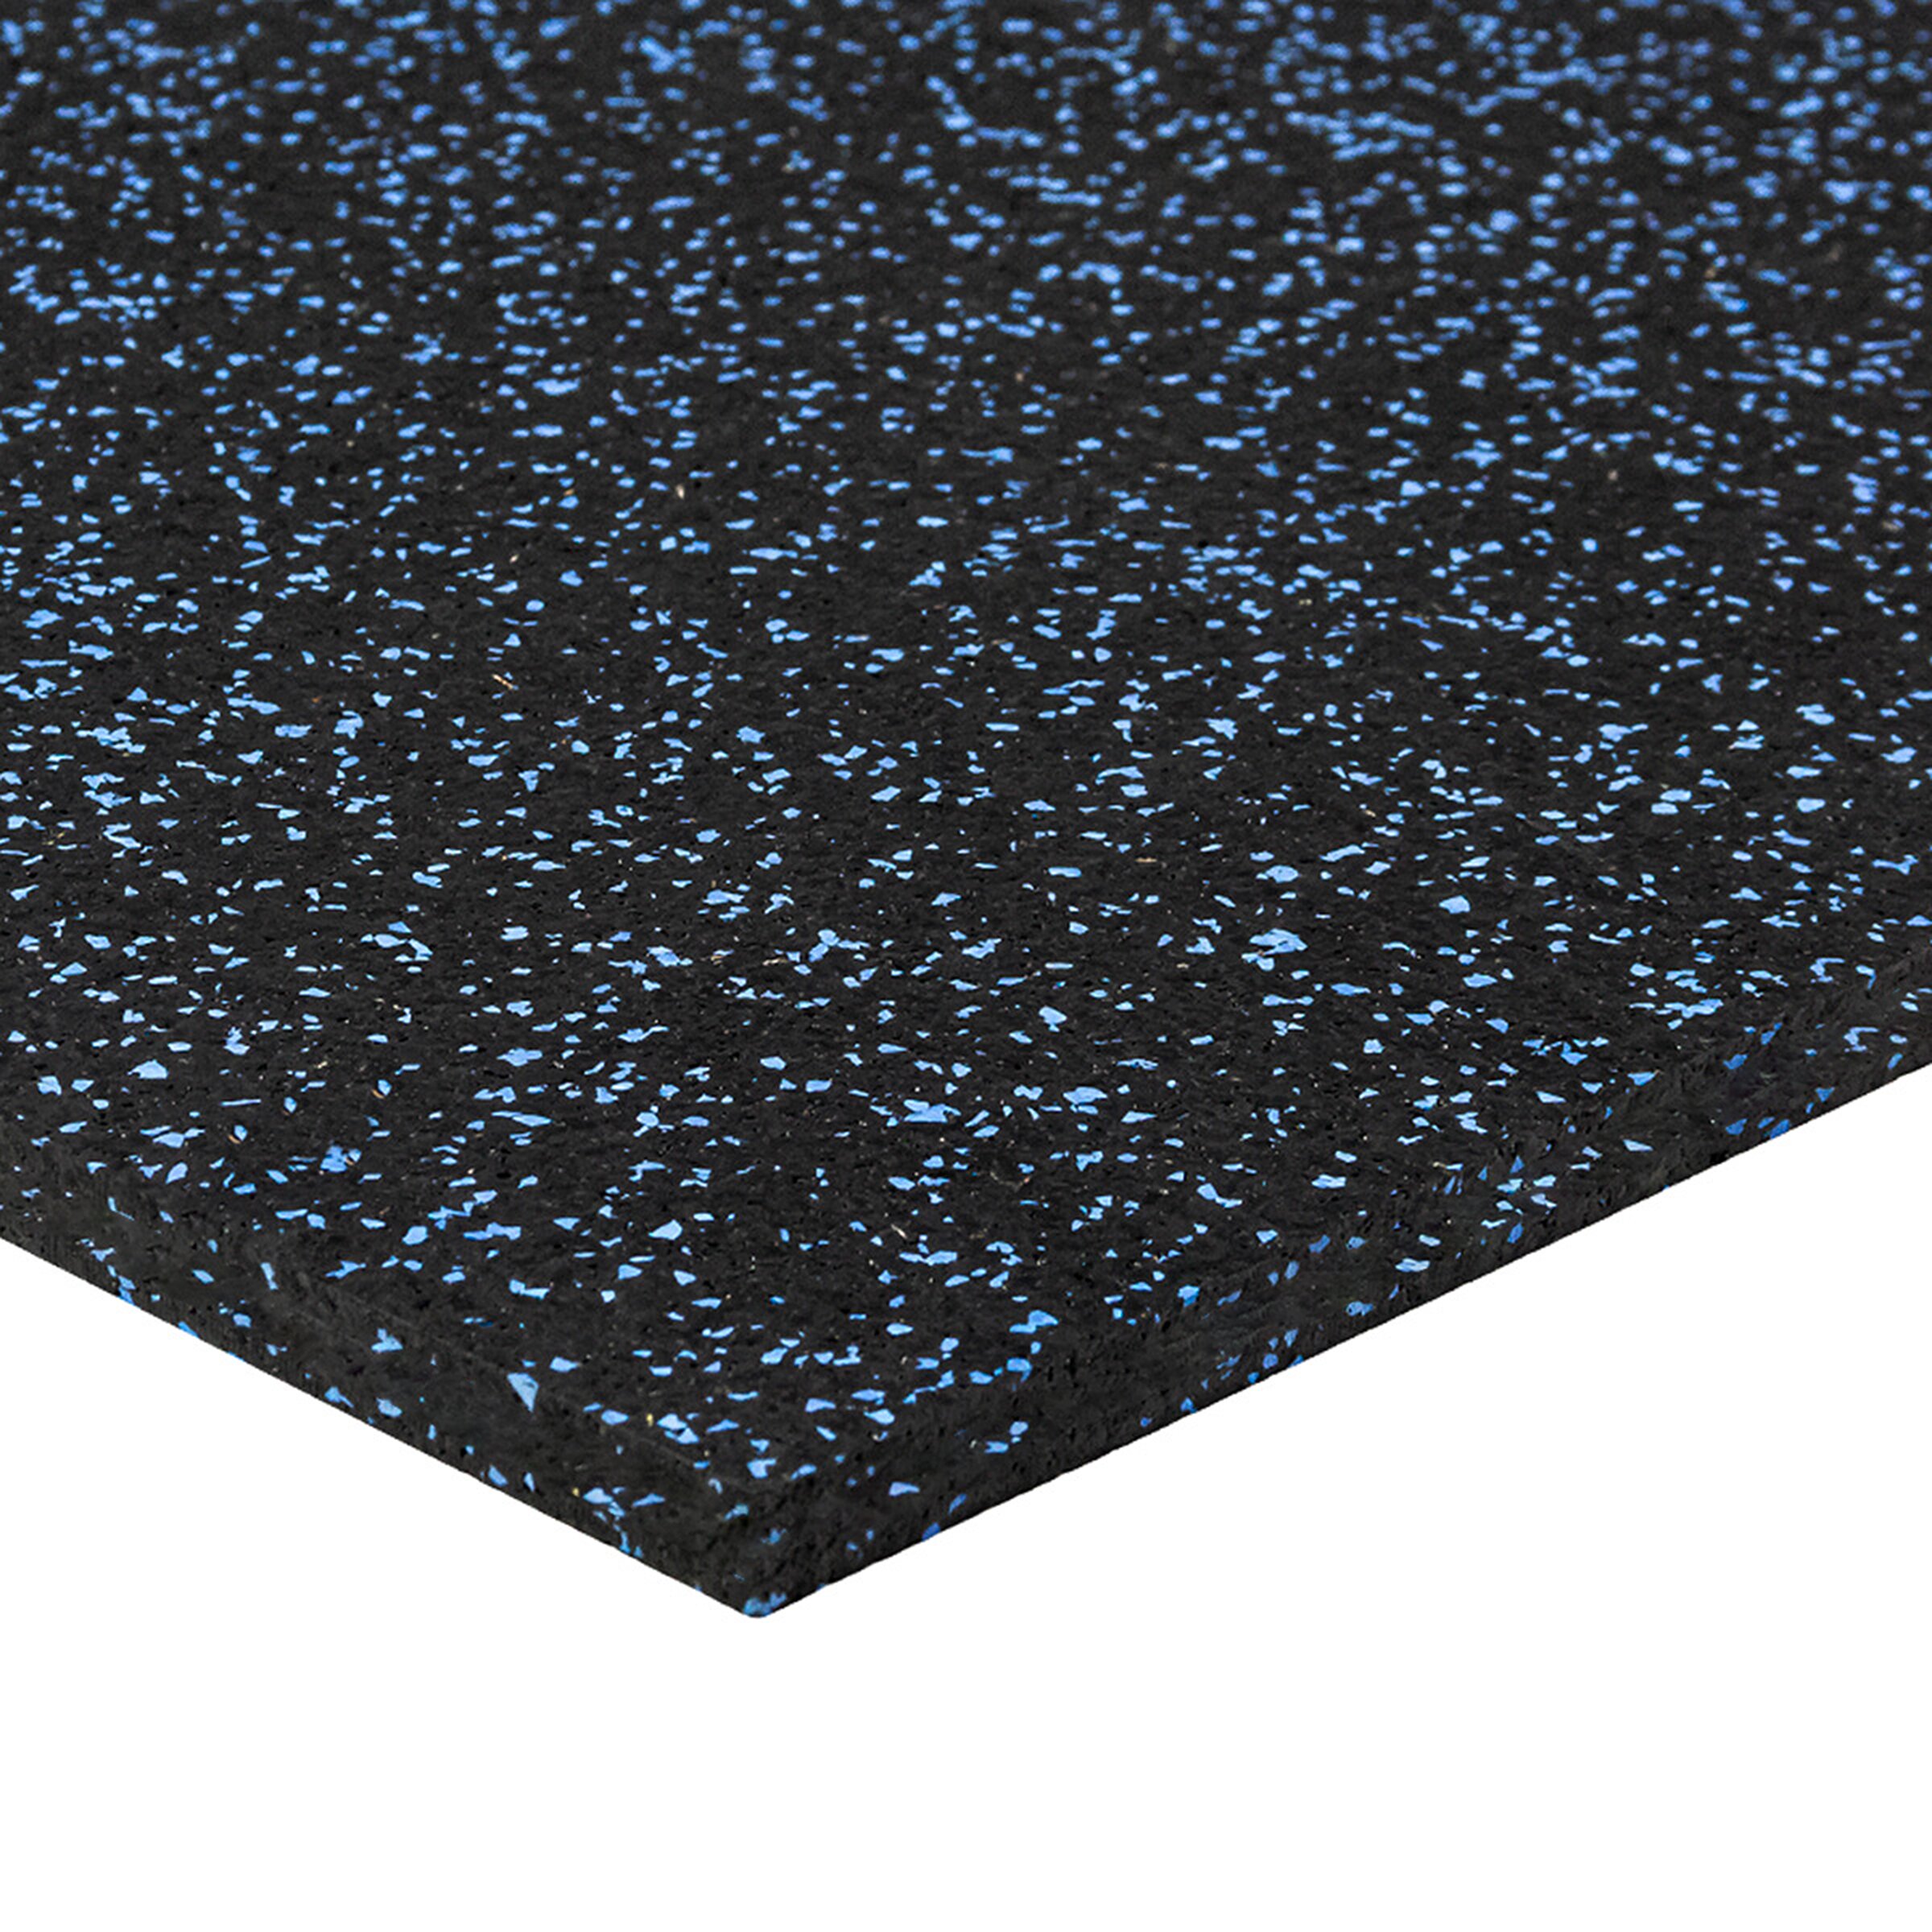 Černo-modrá podlahová guma (puzzle - střed) FLOMA FitFlo SF1050 - délka 50 cm, šířka 50 cm, výška 1,6 cm